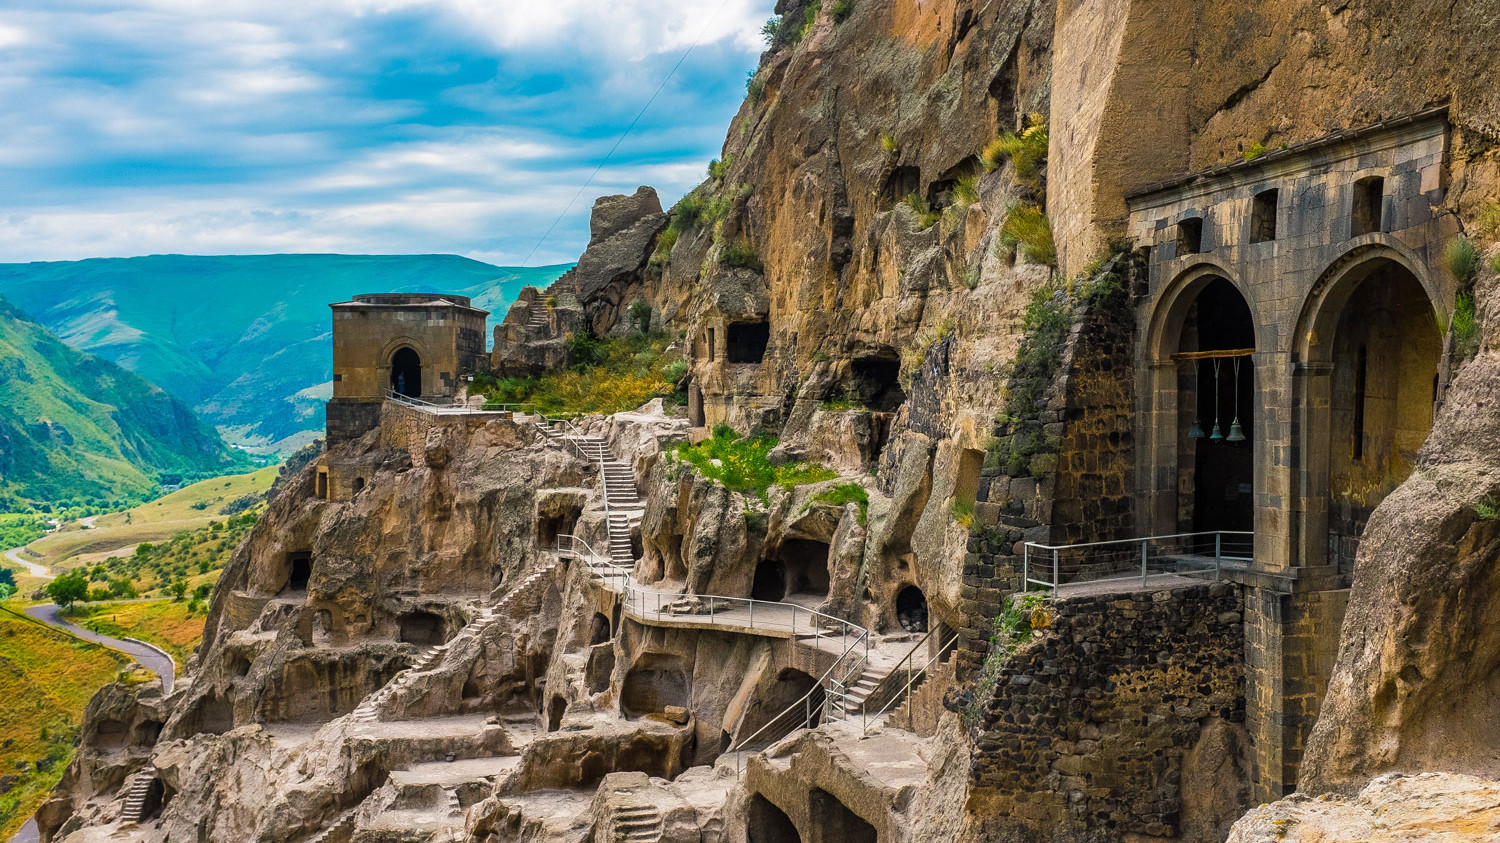 The rock-hewn cave-monastery Vardzia